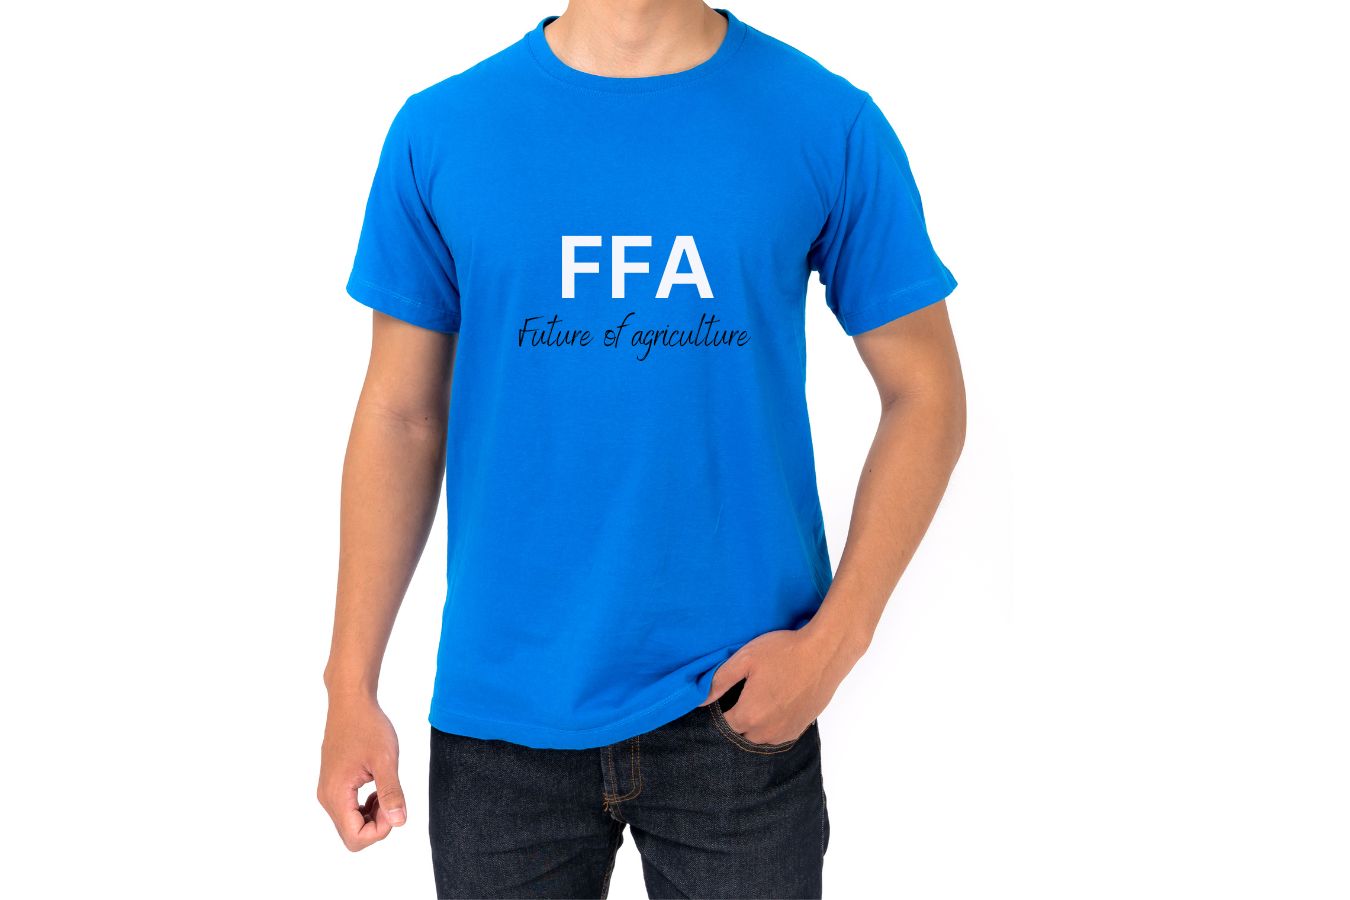 A guy sporting a blue FFA t shirt